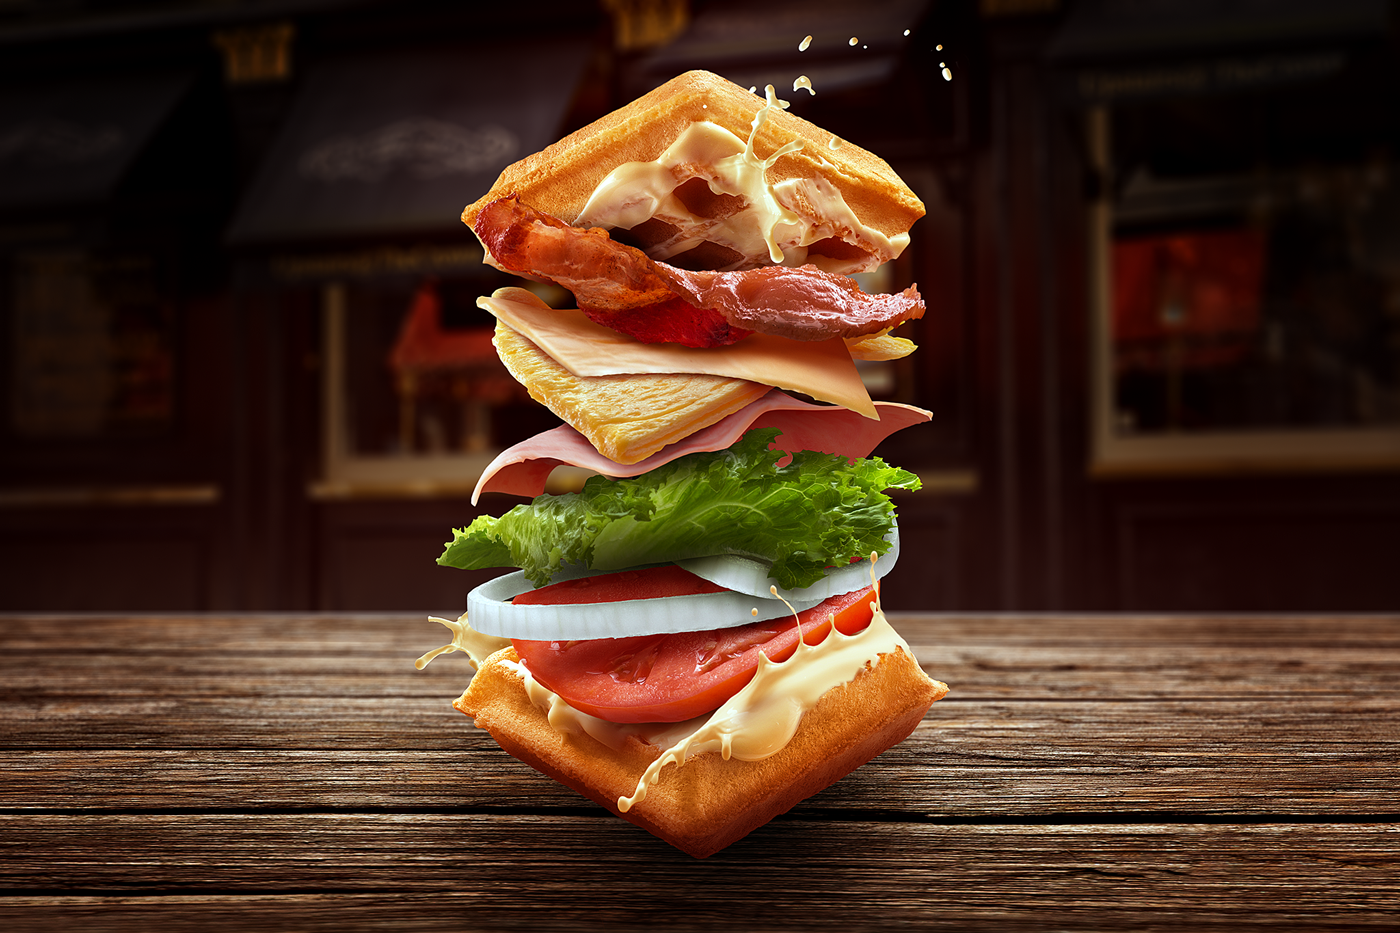 Мод на фаст фуд. Сэндвич. Треугольные бутерброды. Креативные бутерброды. Сэндвич треугольный.